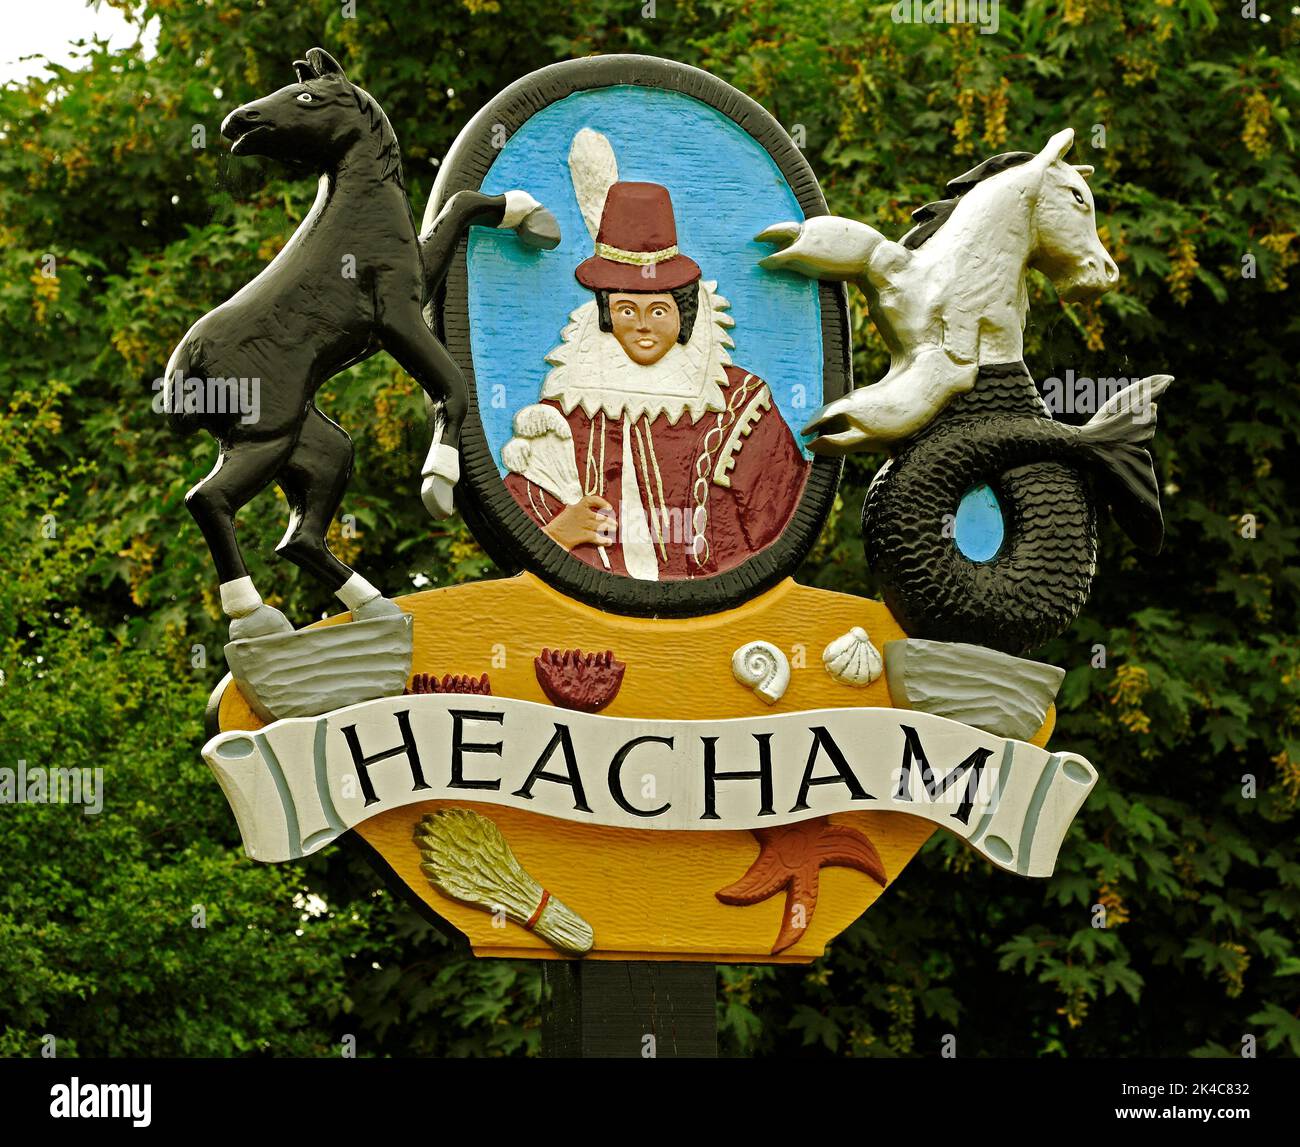 Heacham, Village sign, Pocahontas, Norfolk, England, UK Stock Photo